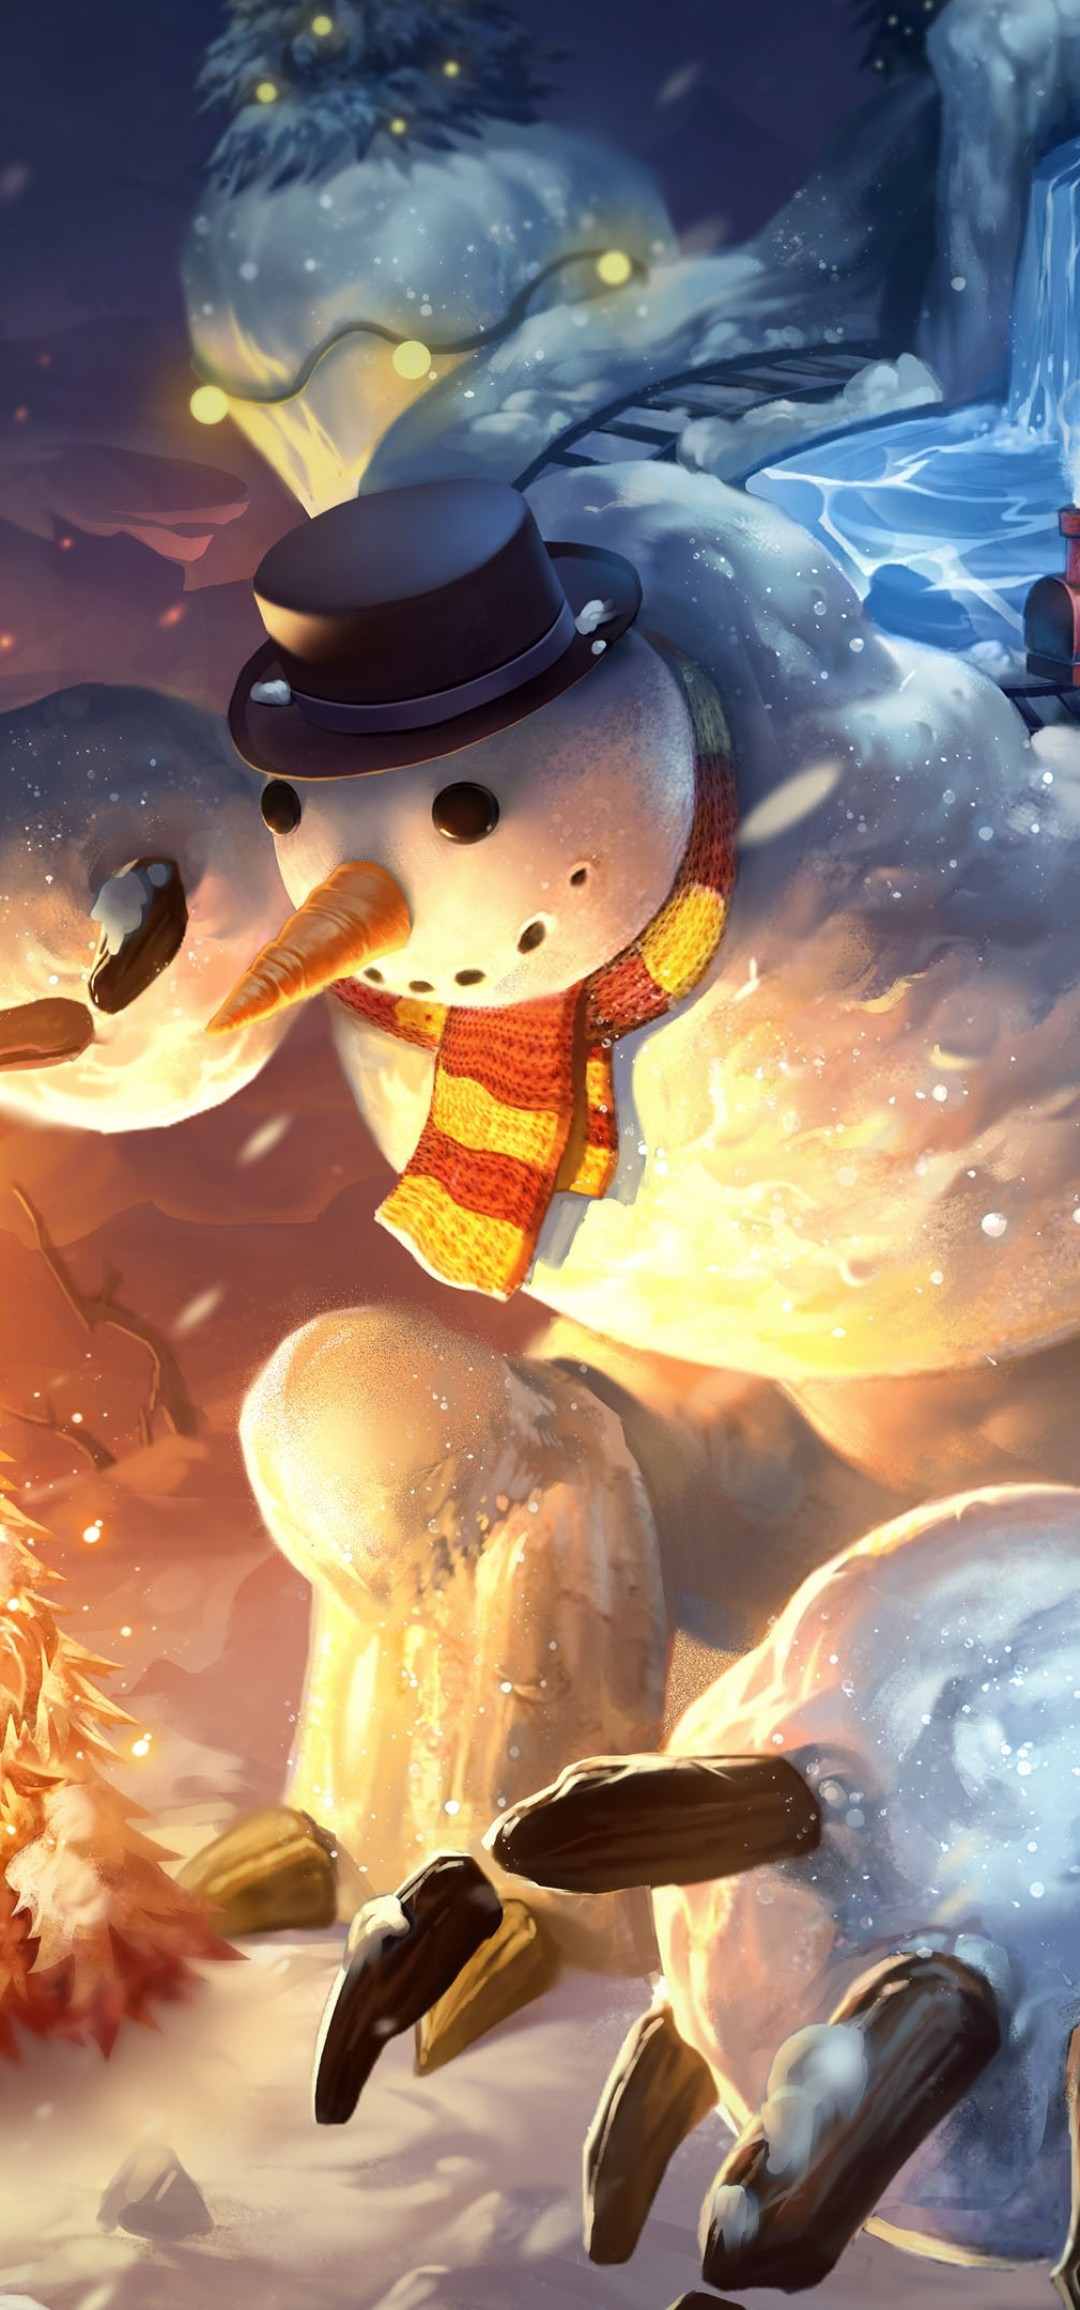 Download 1080x2310 Smite, Landscape, Concept Art, Christmas, Snowman Wallpaper for Honor View 20